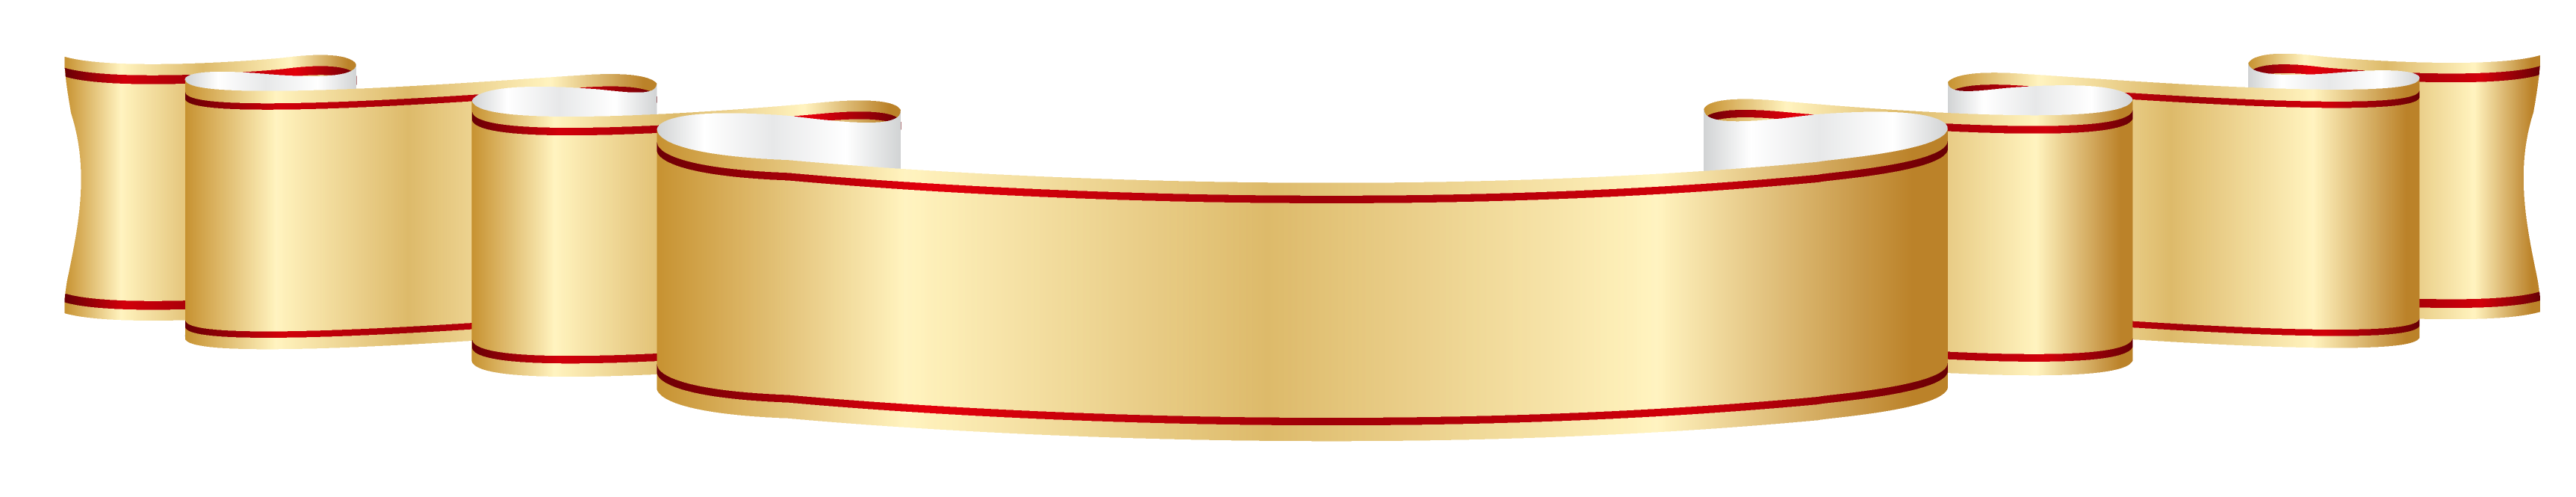 Image PNG ruban dor avec fond Transparent